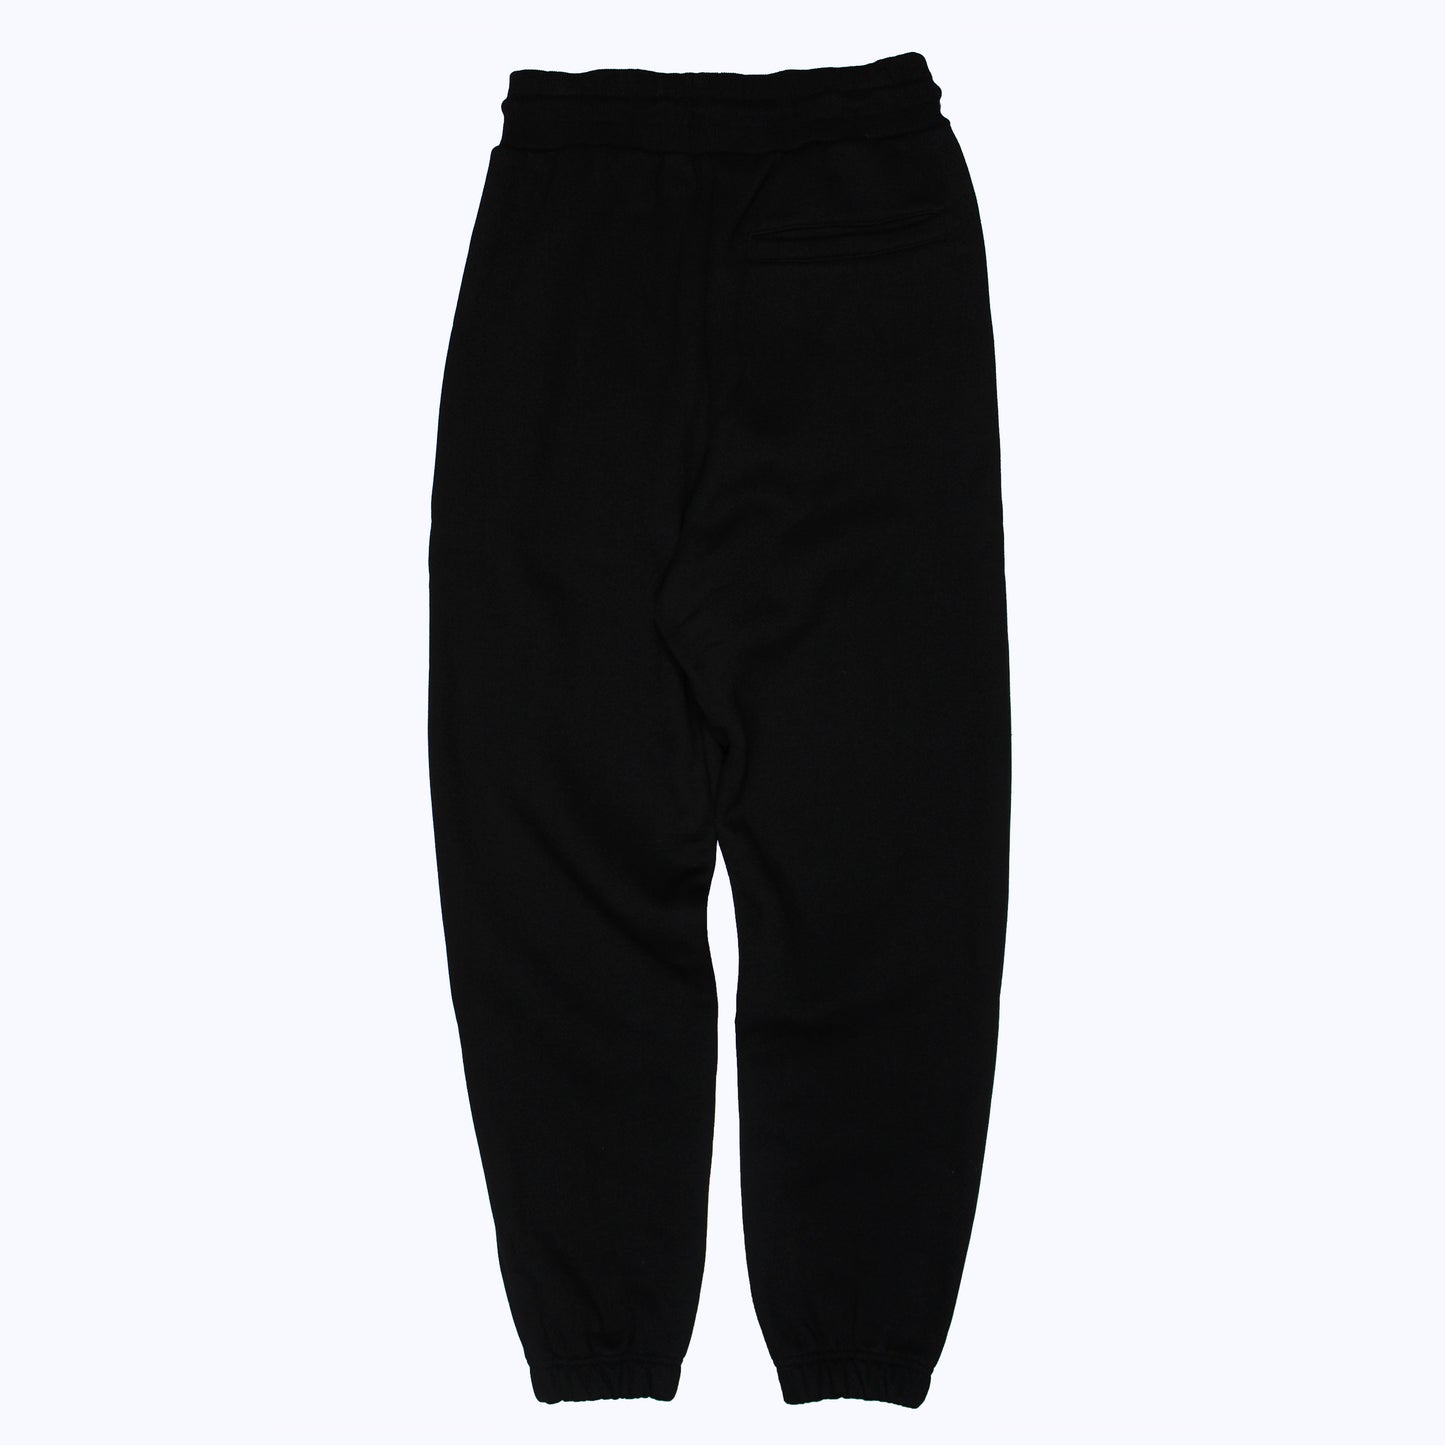 sweatpants in black